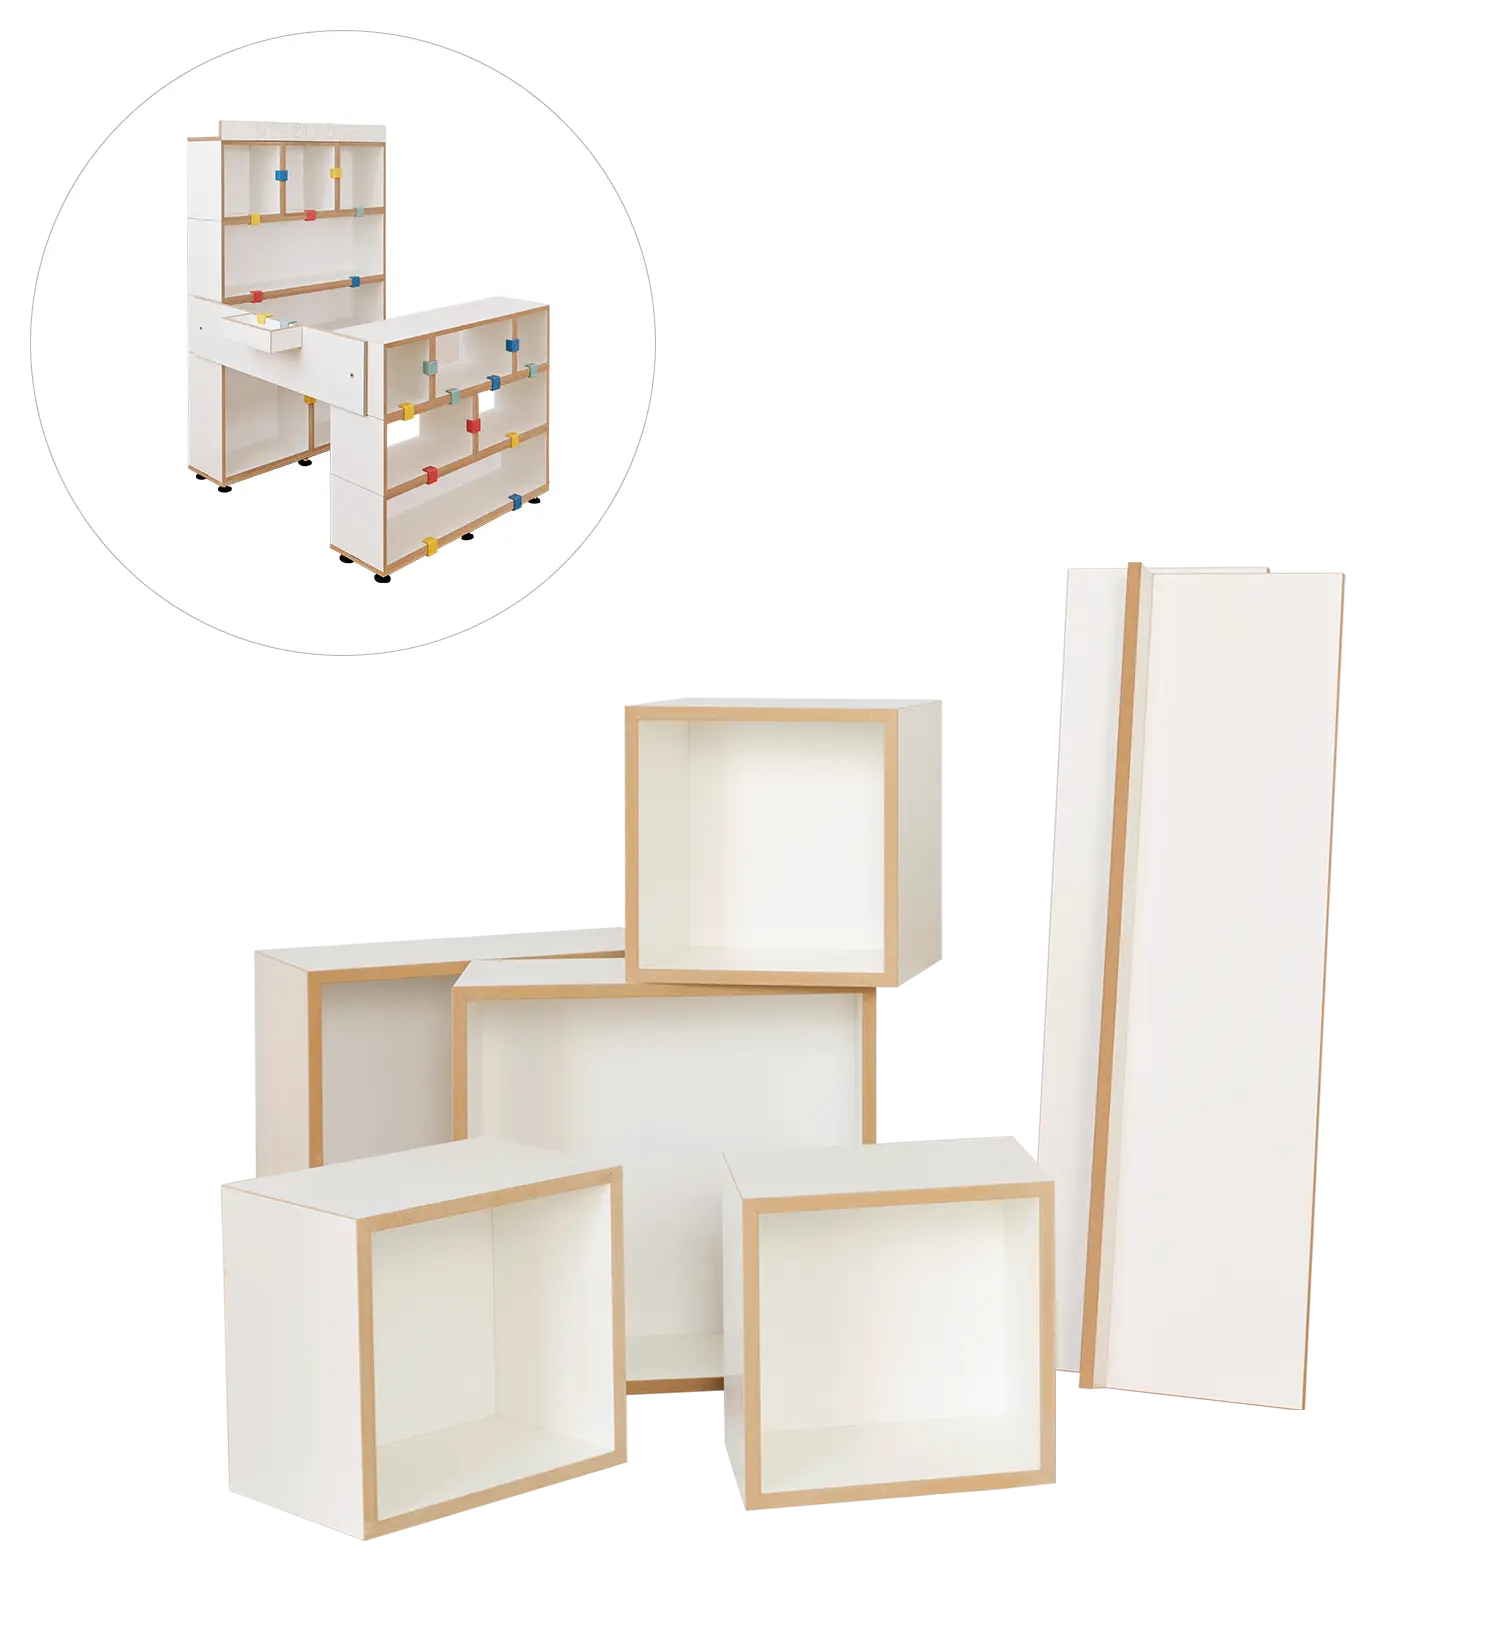 Kiezkueche-Erweiterungsset, Freisteller-2, 3d blank box empty business design paper interior room card foreground-ocher_lighter foreground-apricot_lighter